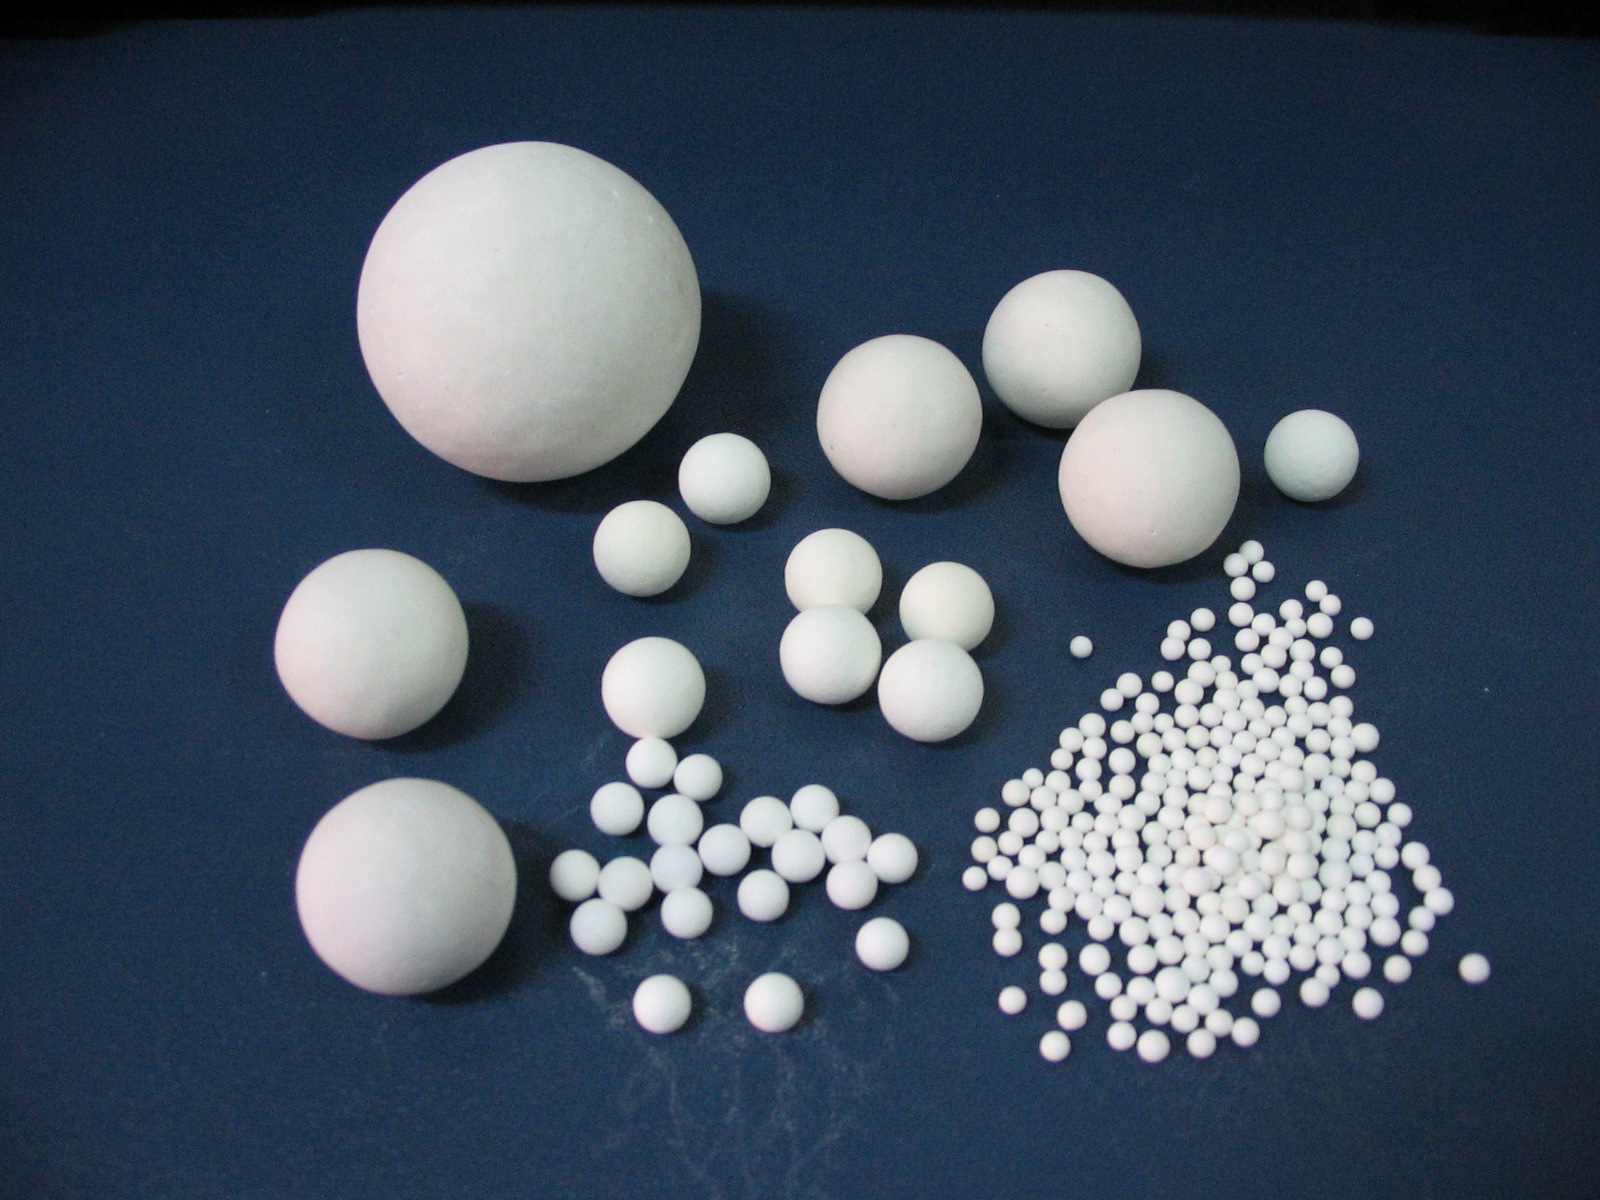  Alumina Ball for Grinding (Alumine Ball pour le meulage)